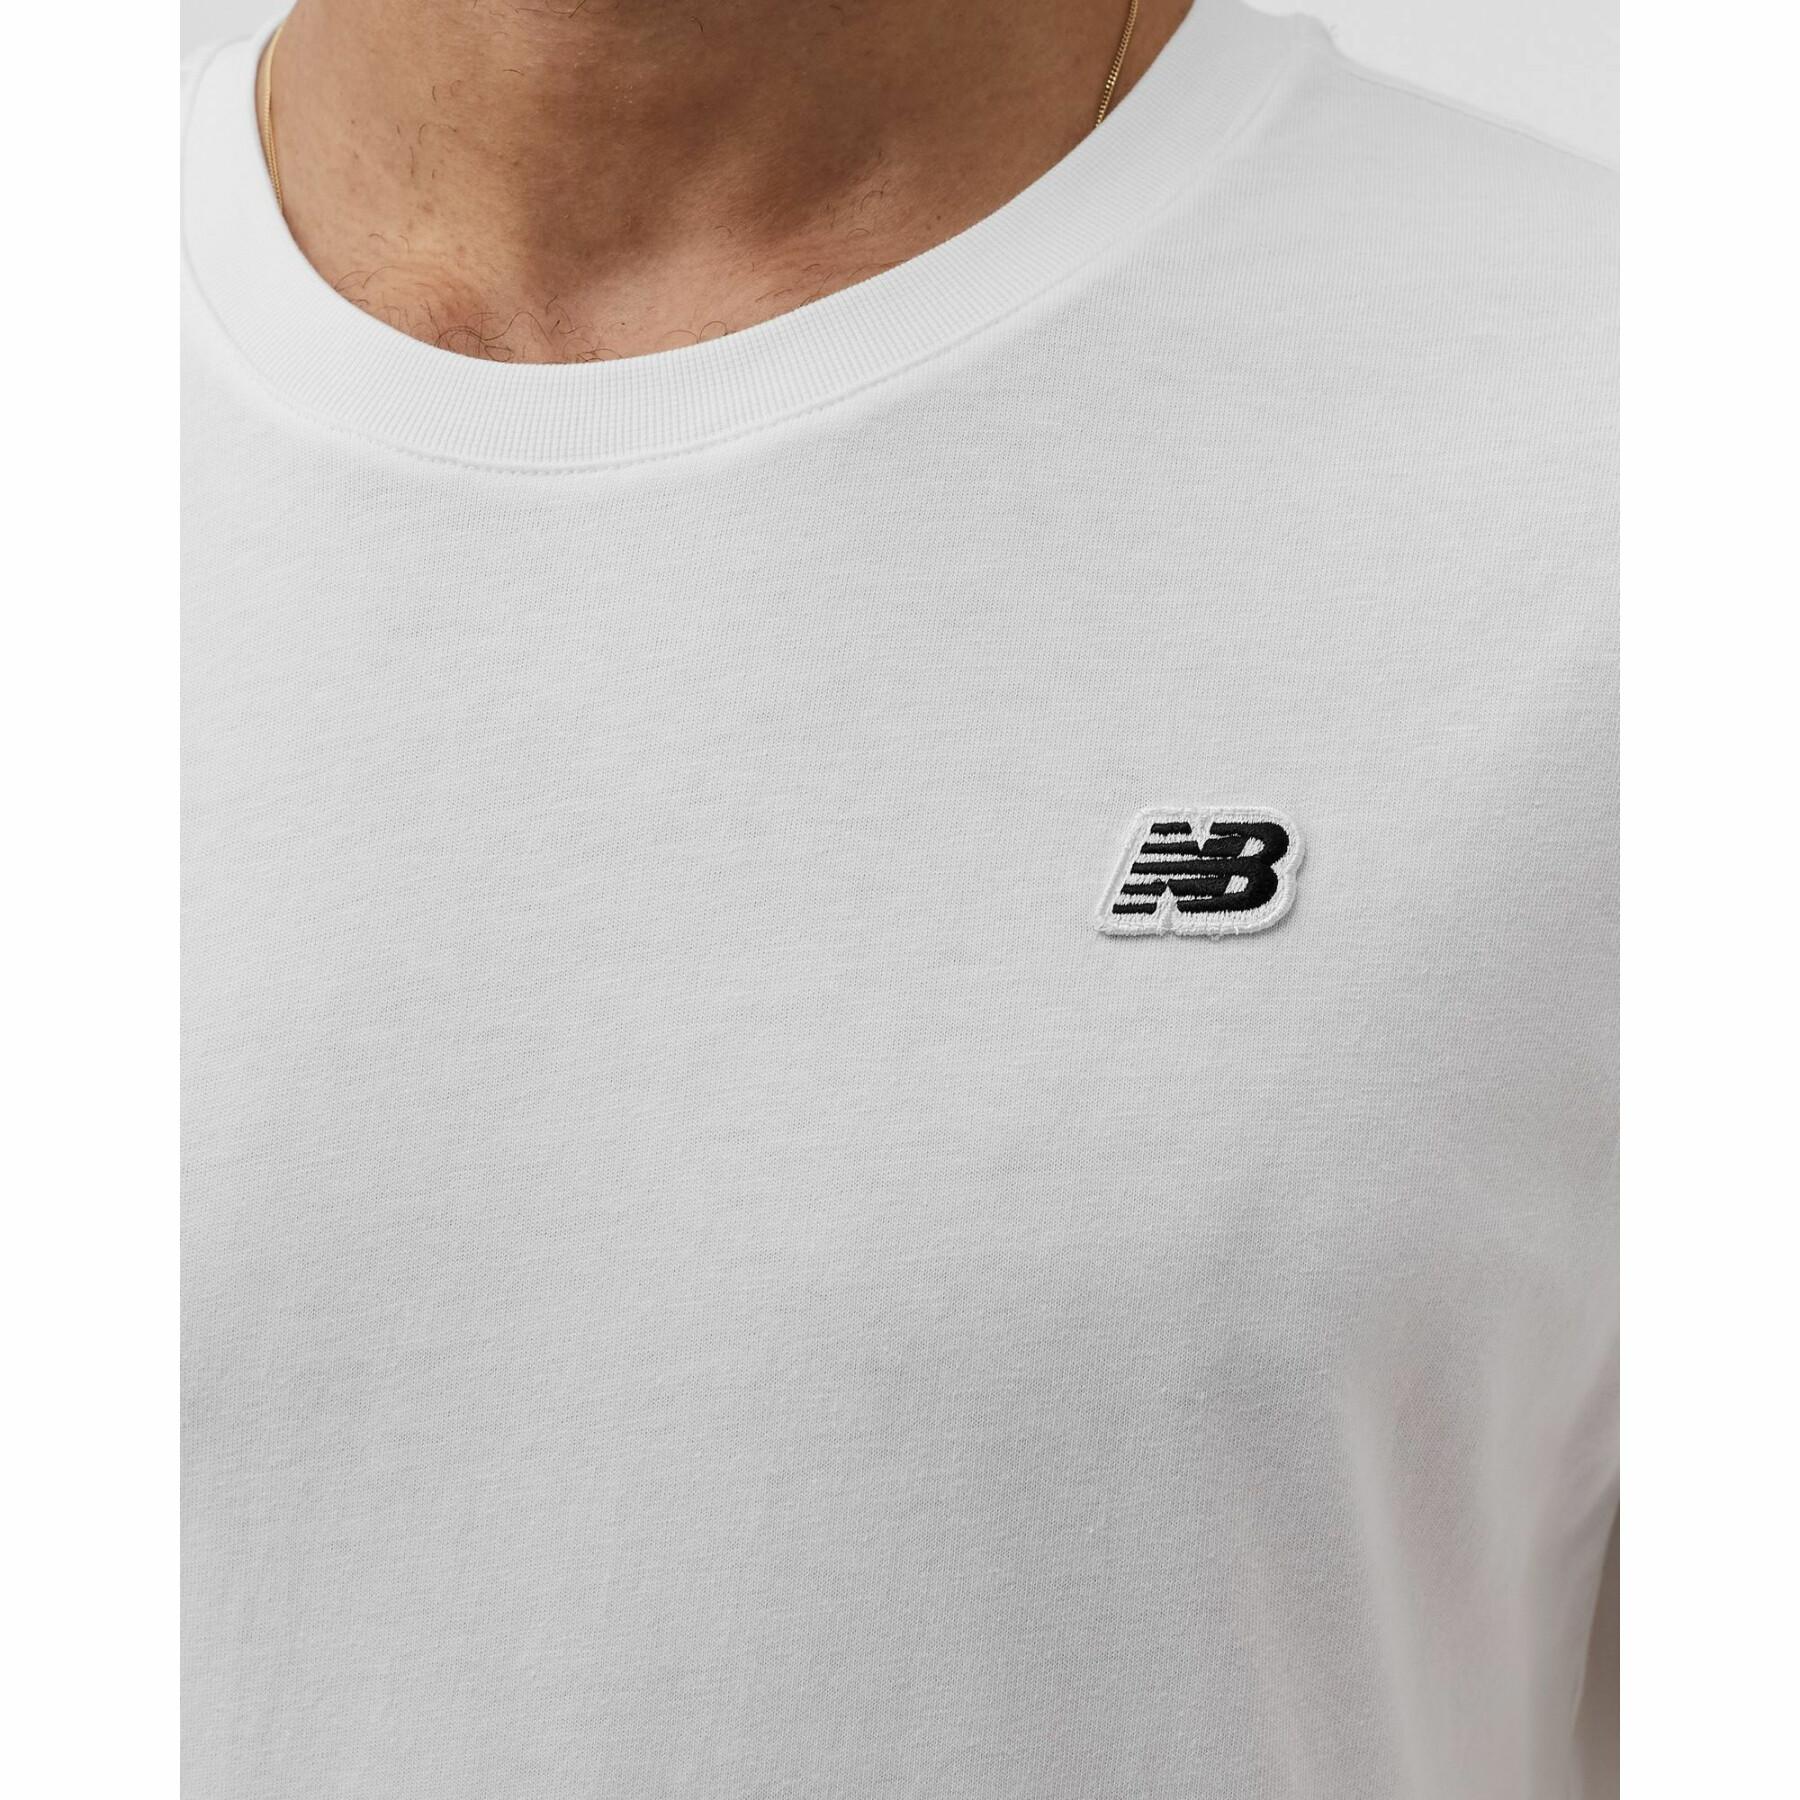 T-shirt New Balance Logo